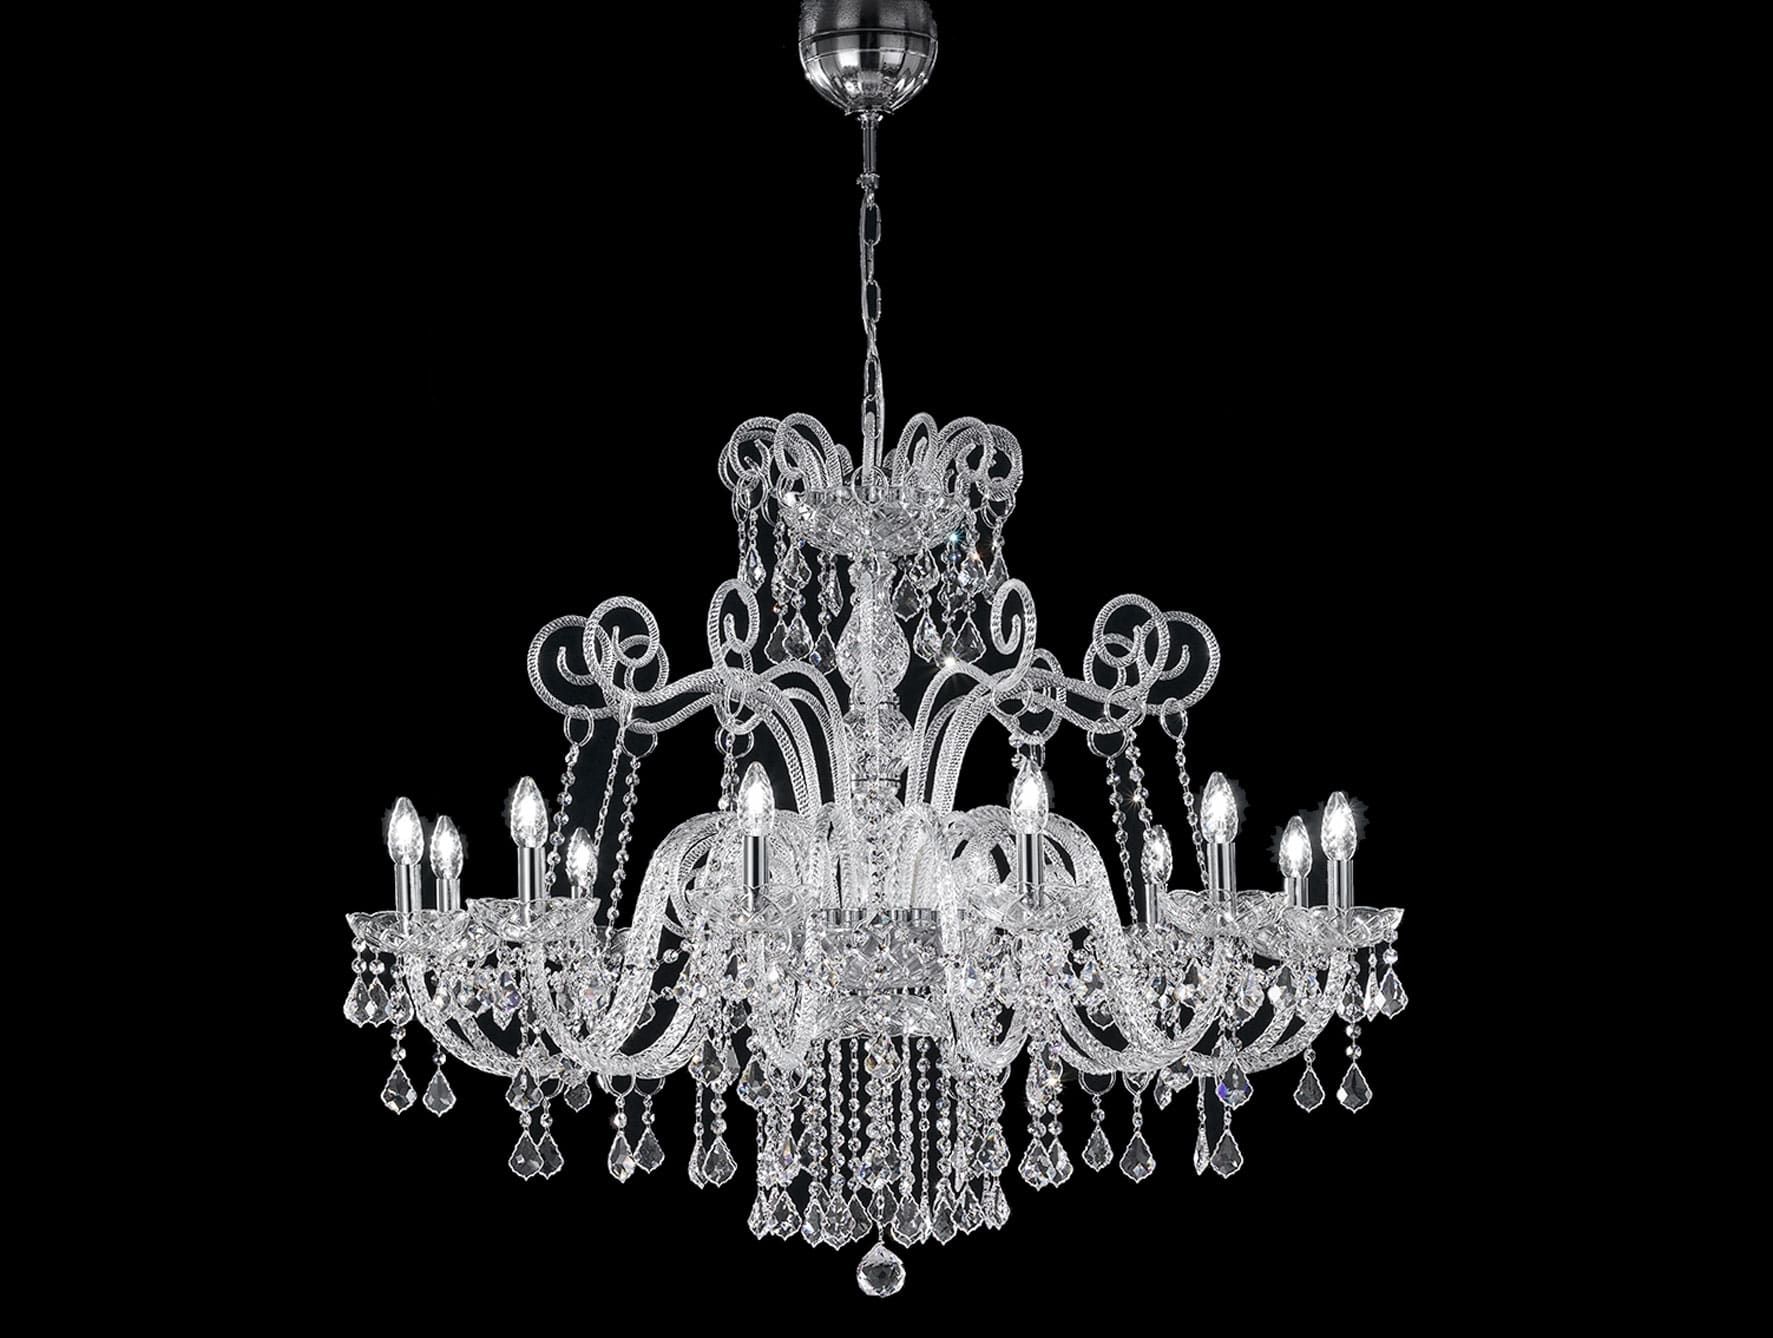 Dandole modern luxury chandelier with clear glass